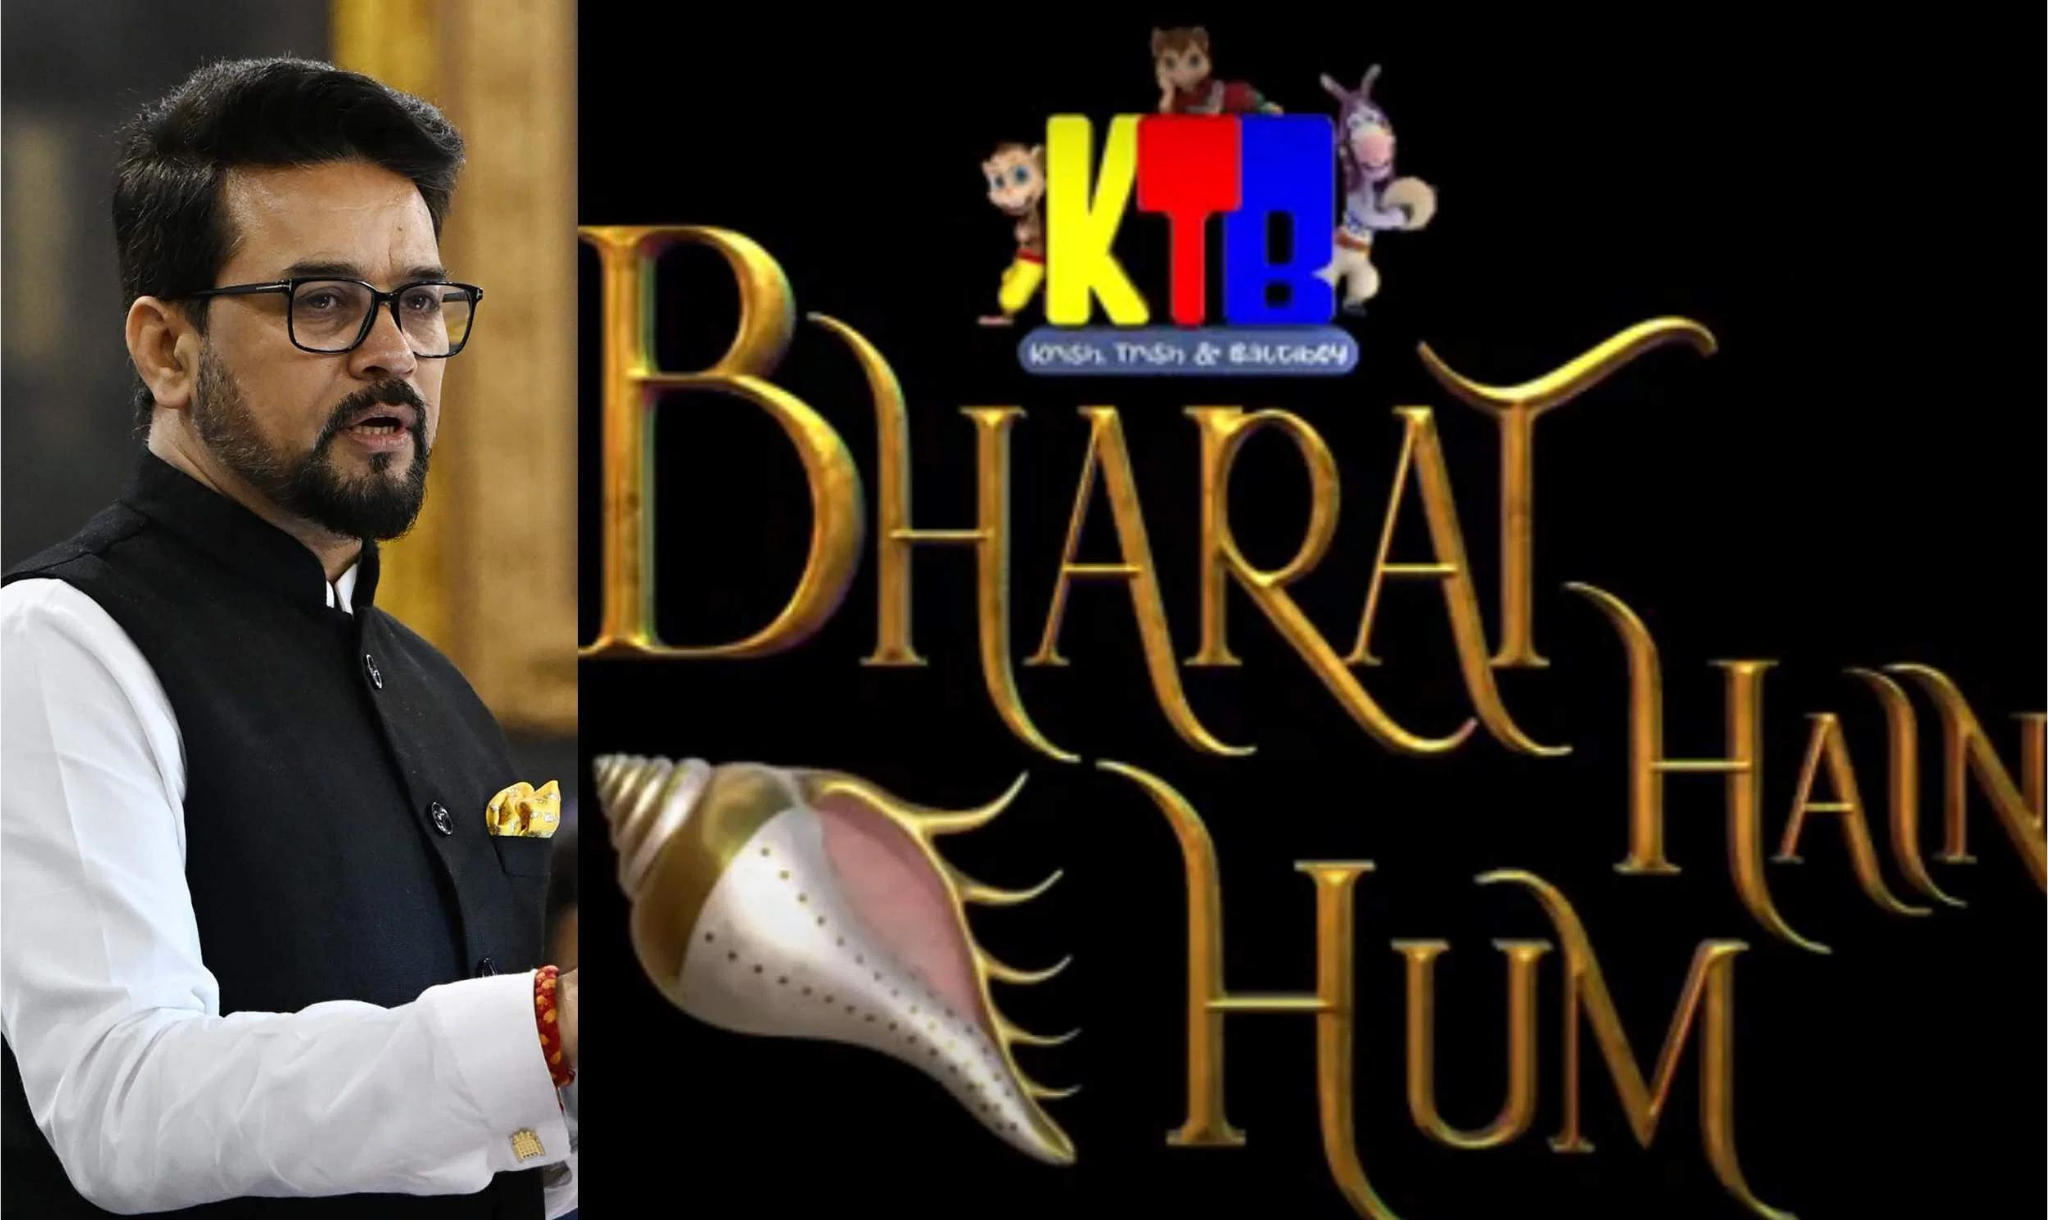 Anurag Thakur Unveils Trailer for Animated Series "Krish, Trish, and Baltiboy – Bharat Hain Hum"_30.1